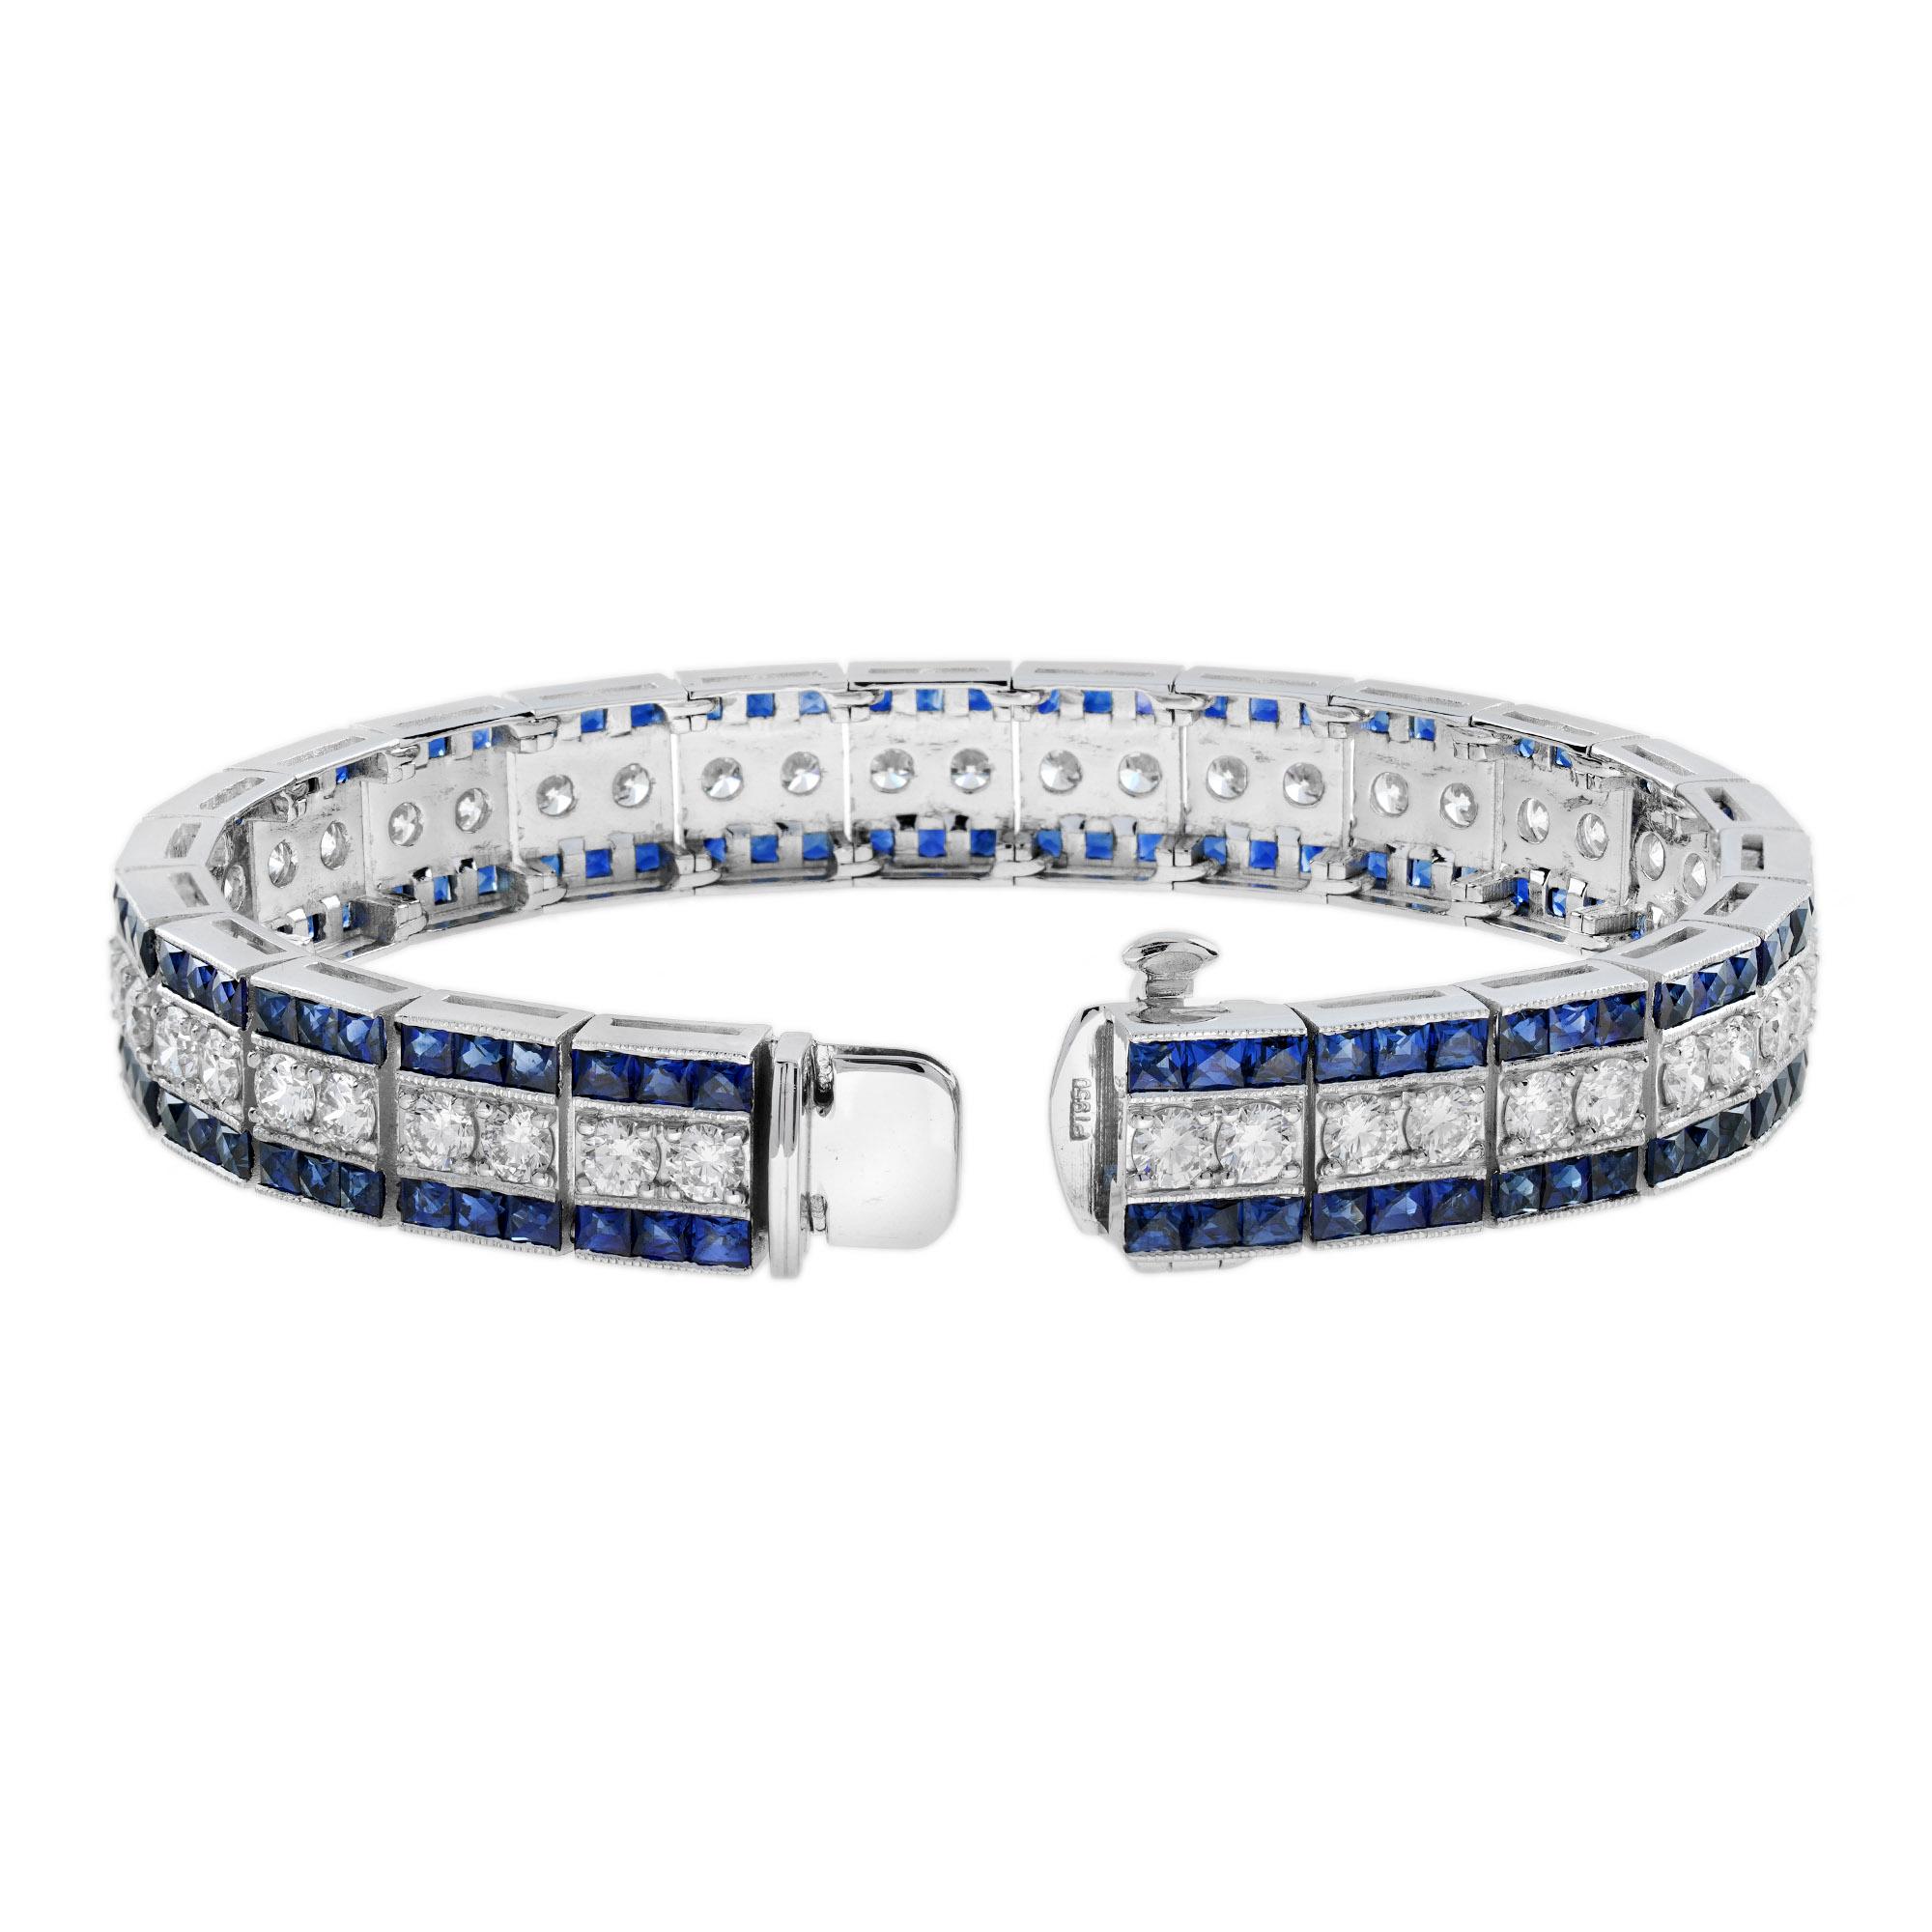 Women's 6.7 Ct. Diamond and Blue Sapphire Art Deco Style Bracelet in Platinum950 For Sale